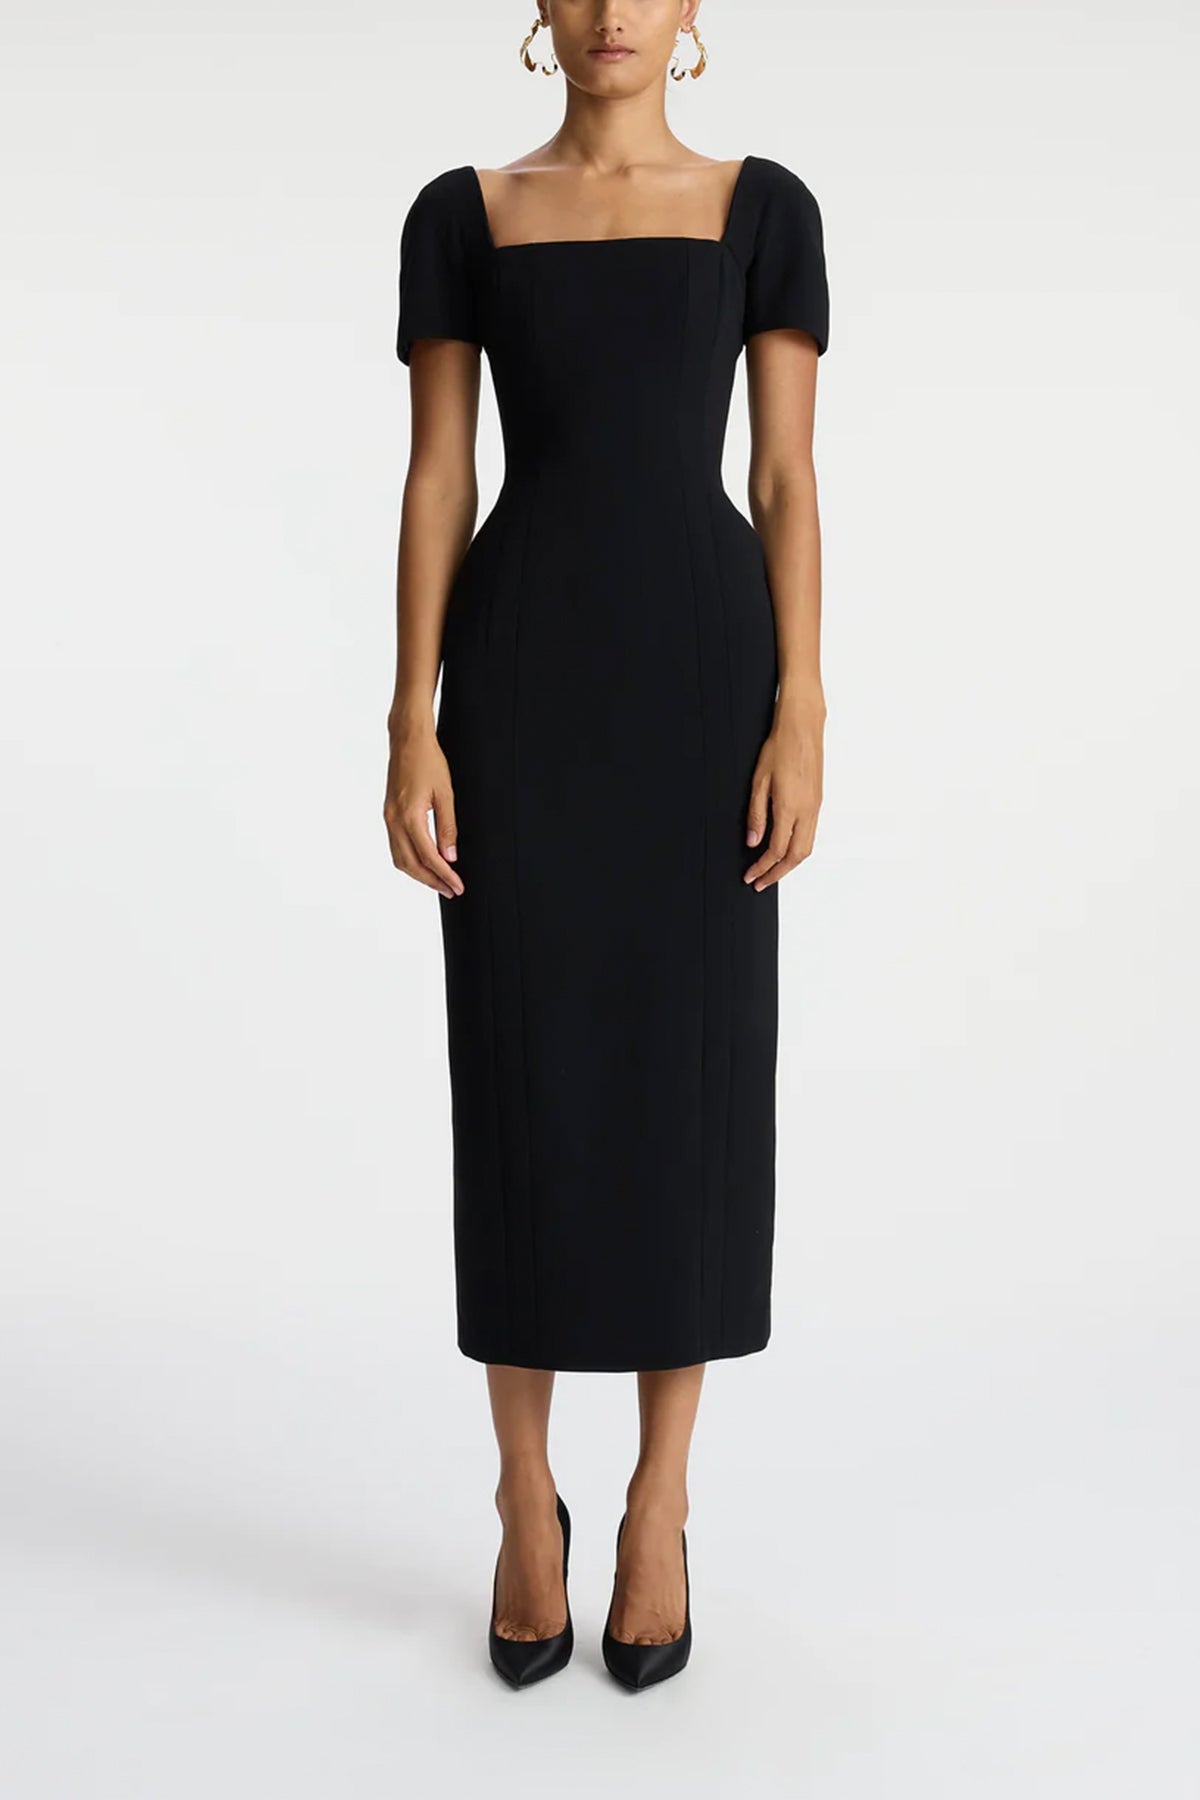 Elvie Midi Dress in Black - shop-olivia.com